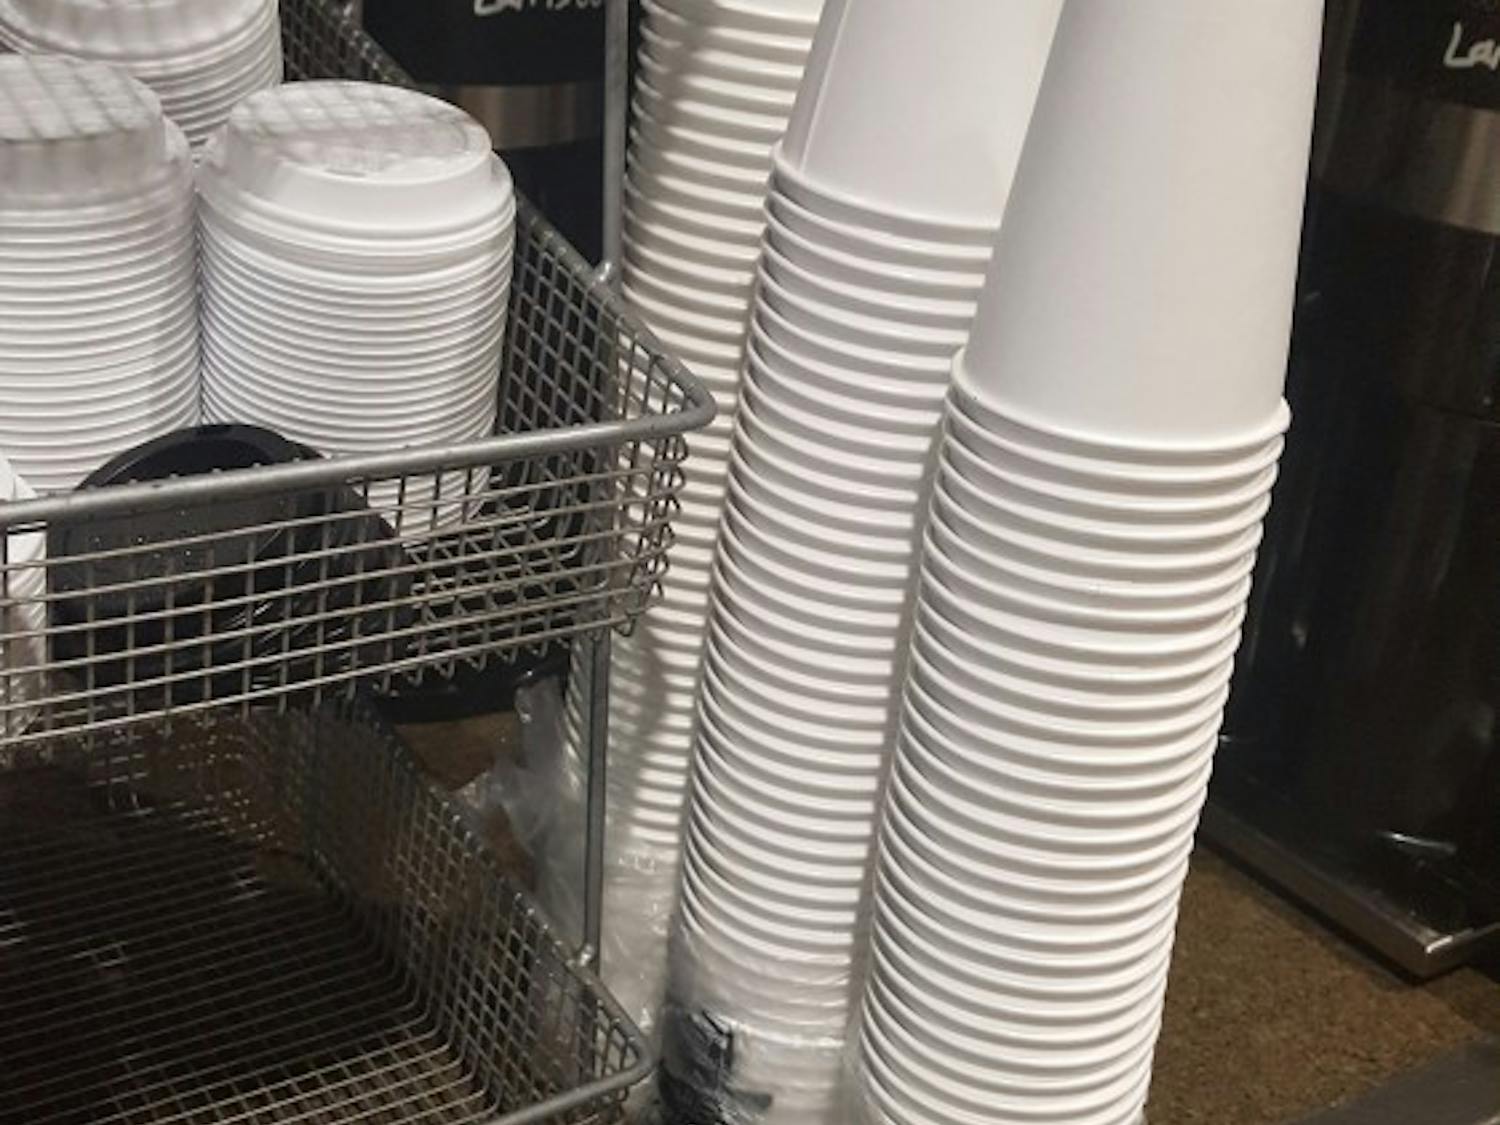 Cups returned to Lenoir Dining Hall Thursday night. 